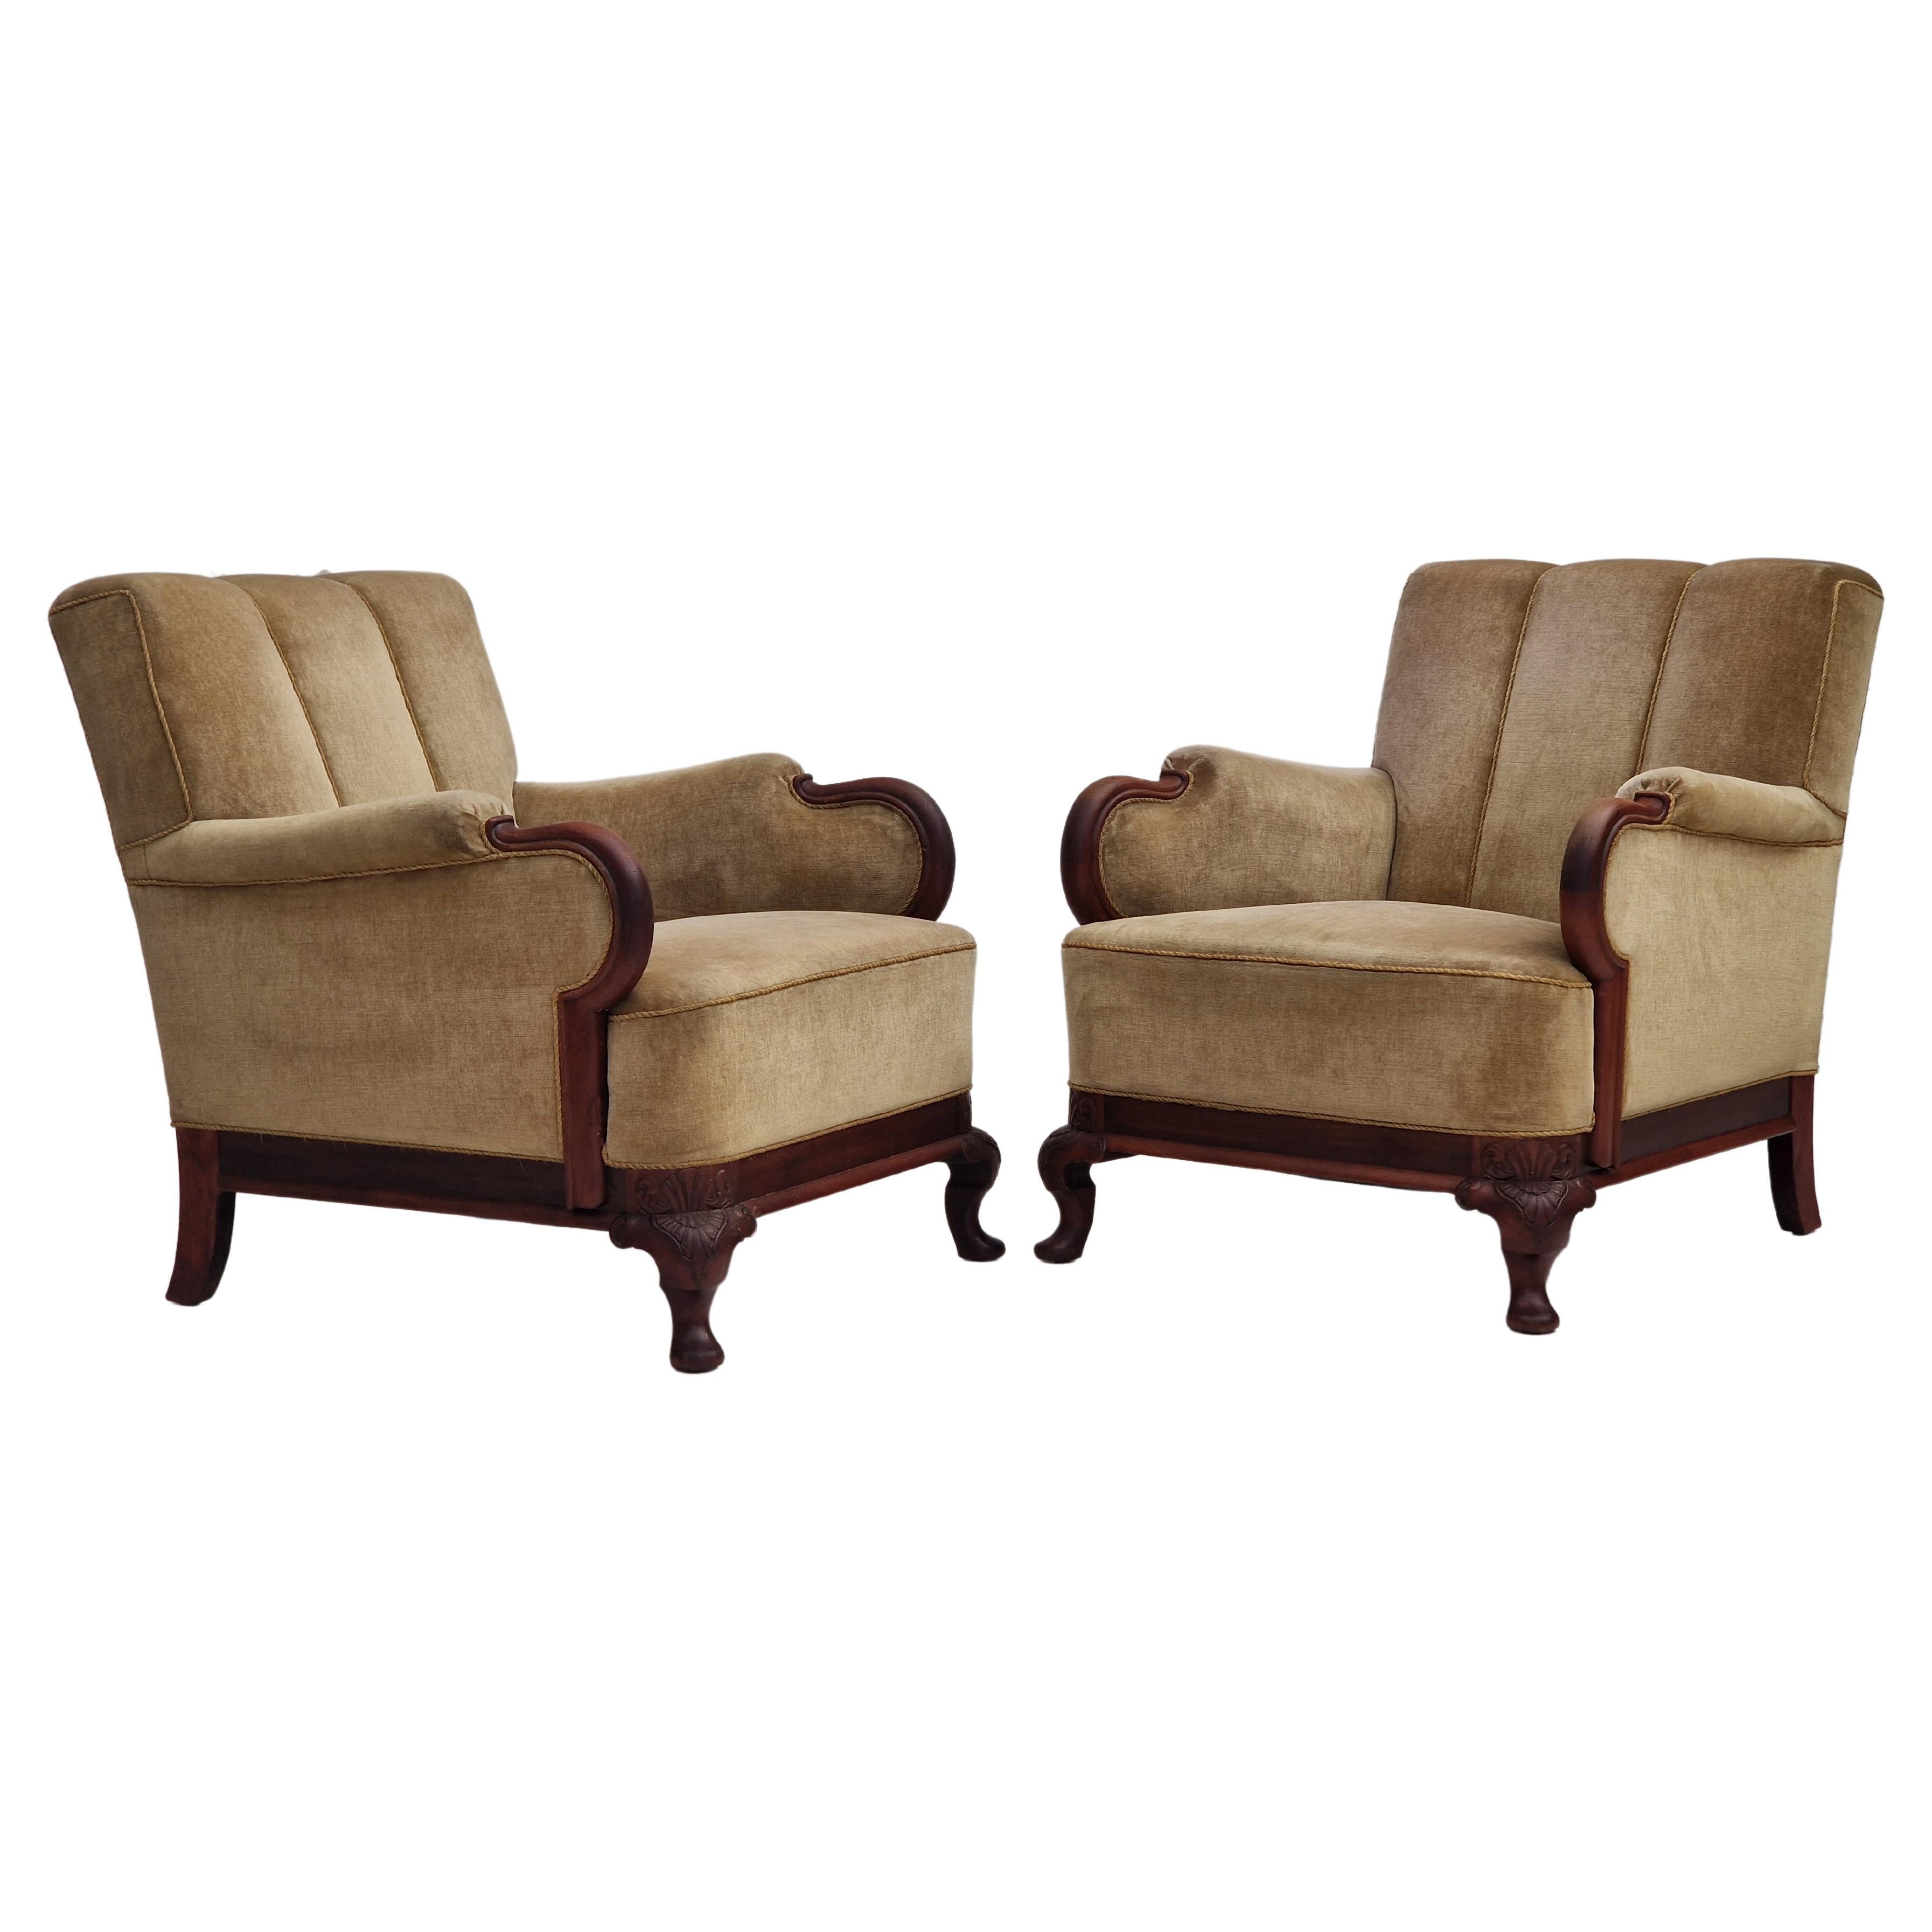 1950s, Danish Design, Set of Armchairs, Teak Wood, Velour, Original Condition For Sale